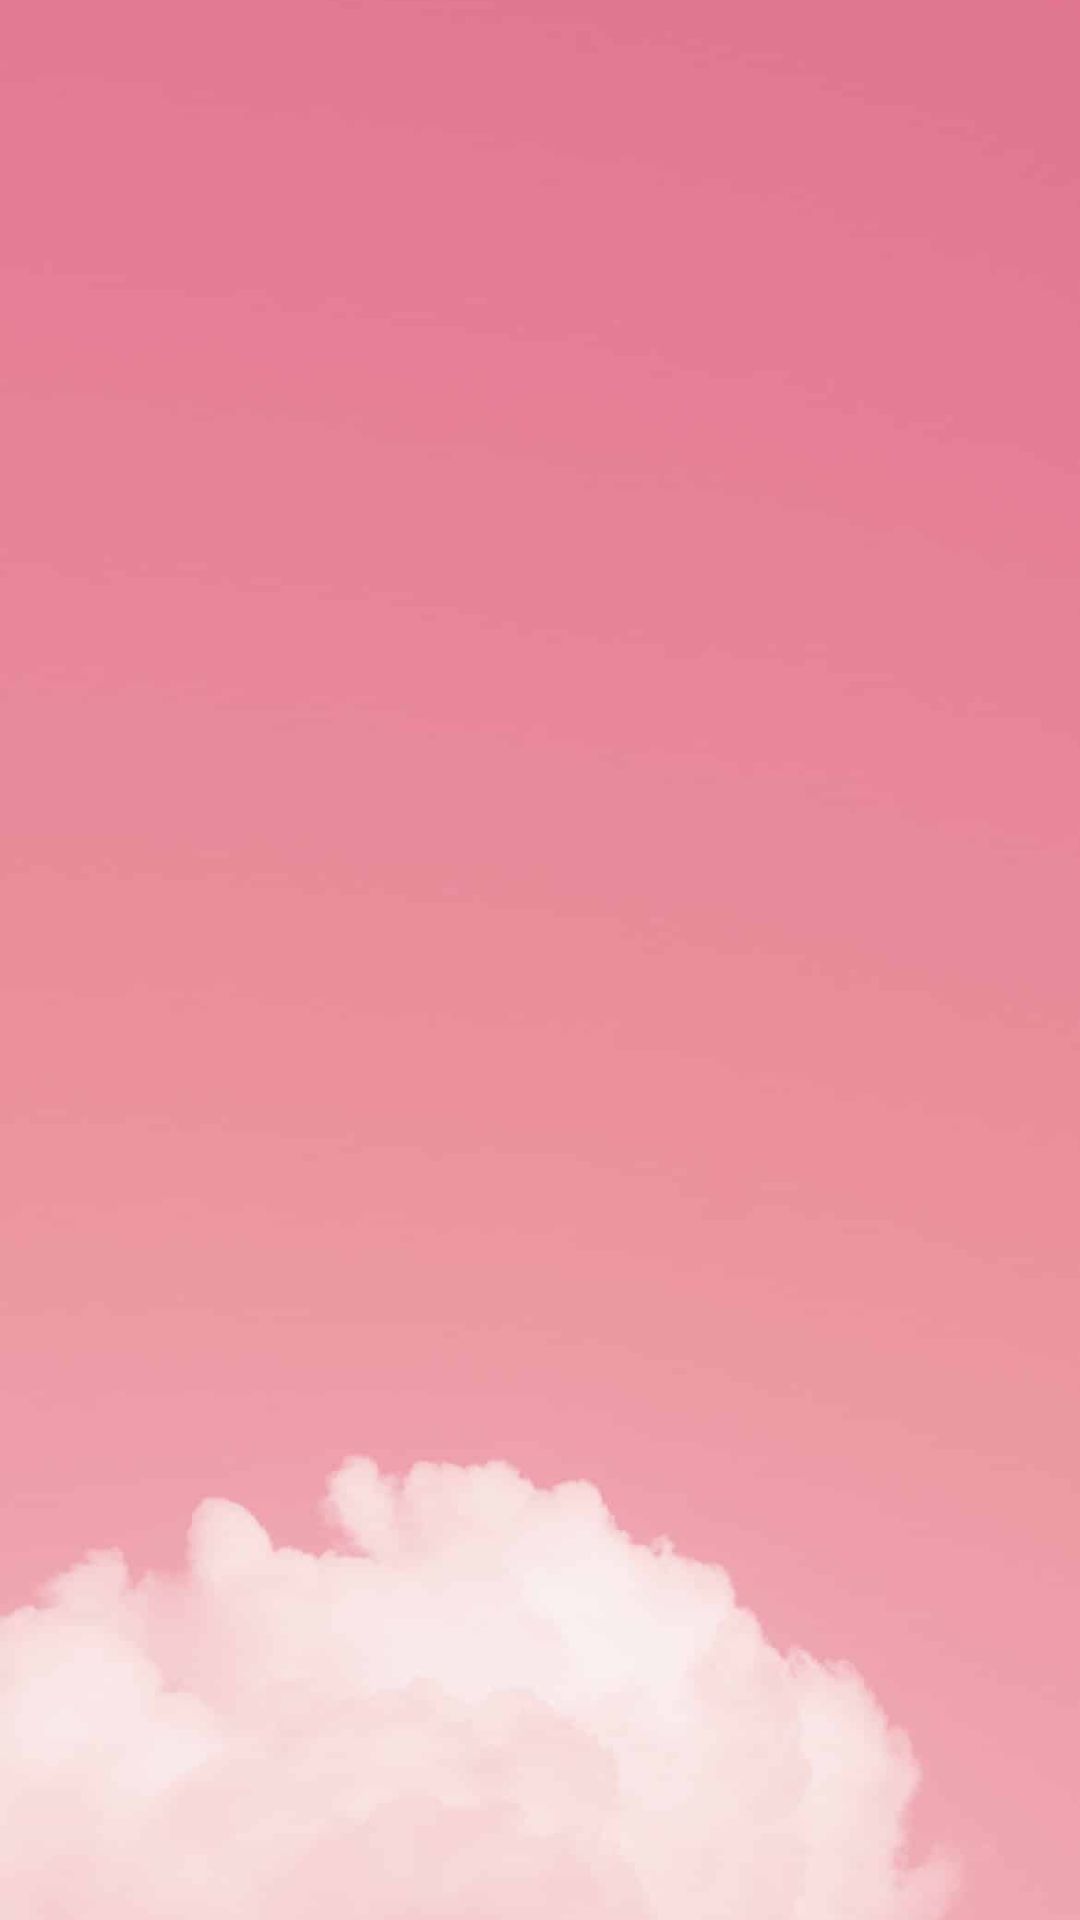 Aesthetic Pink iPhone Lock Screen Wallpaper